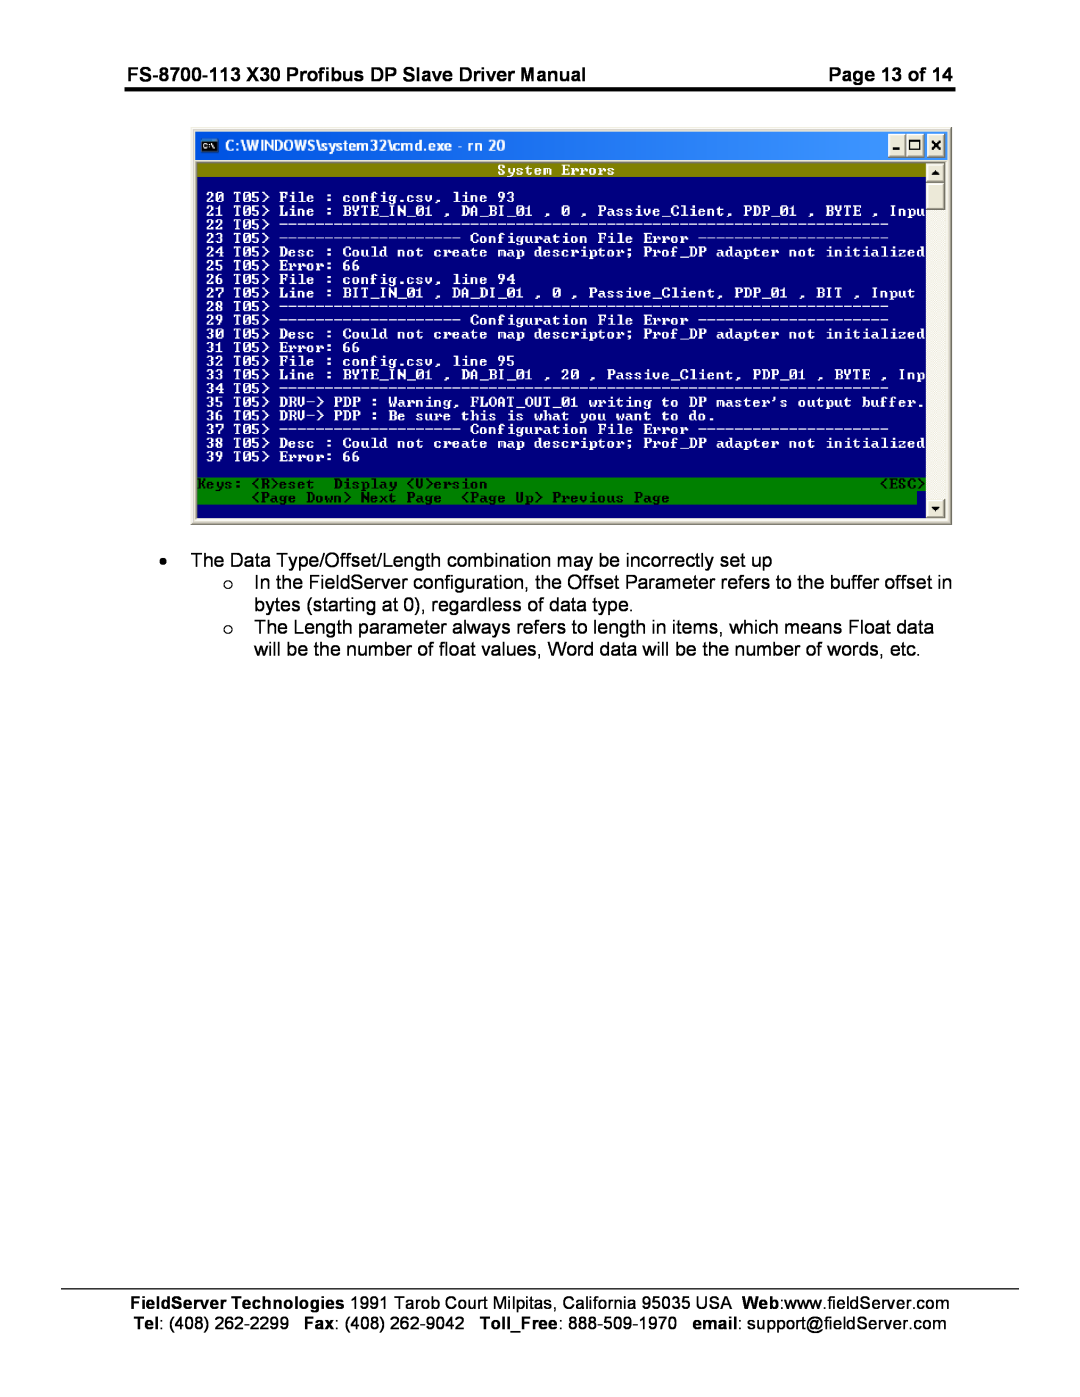 FieldServer instruction manual FS-8700-113 X30 Profibus DP Slave Driver Manual, Page 13 of 